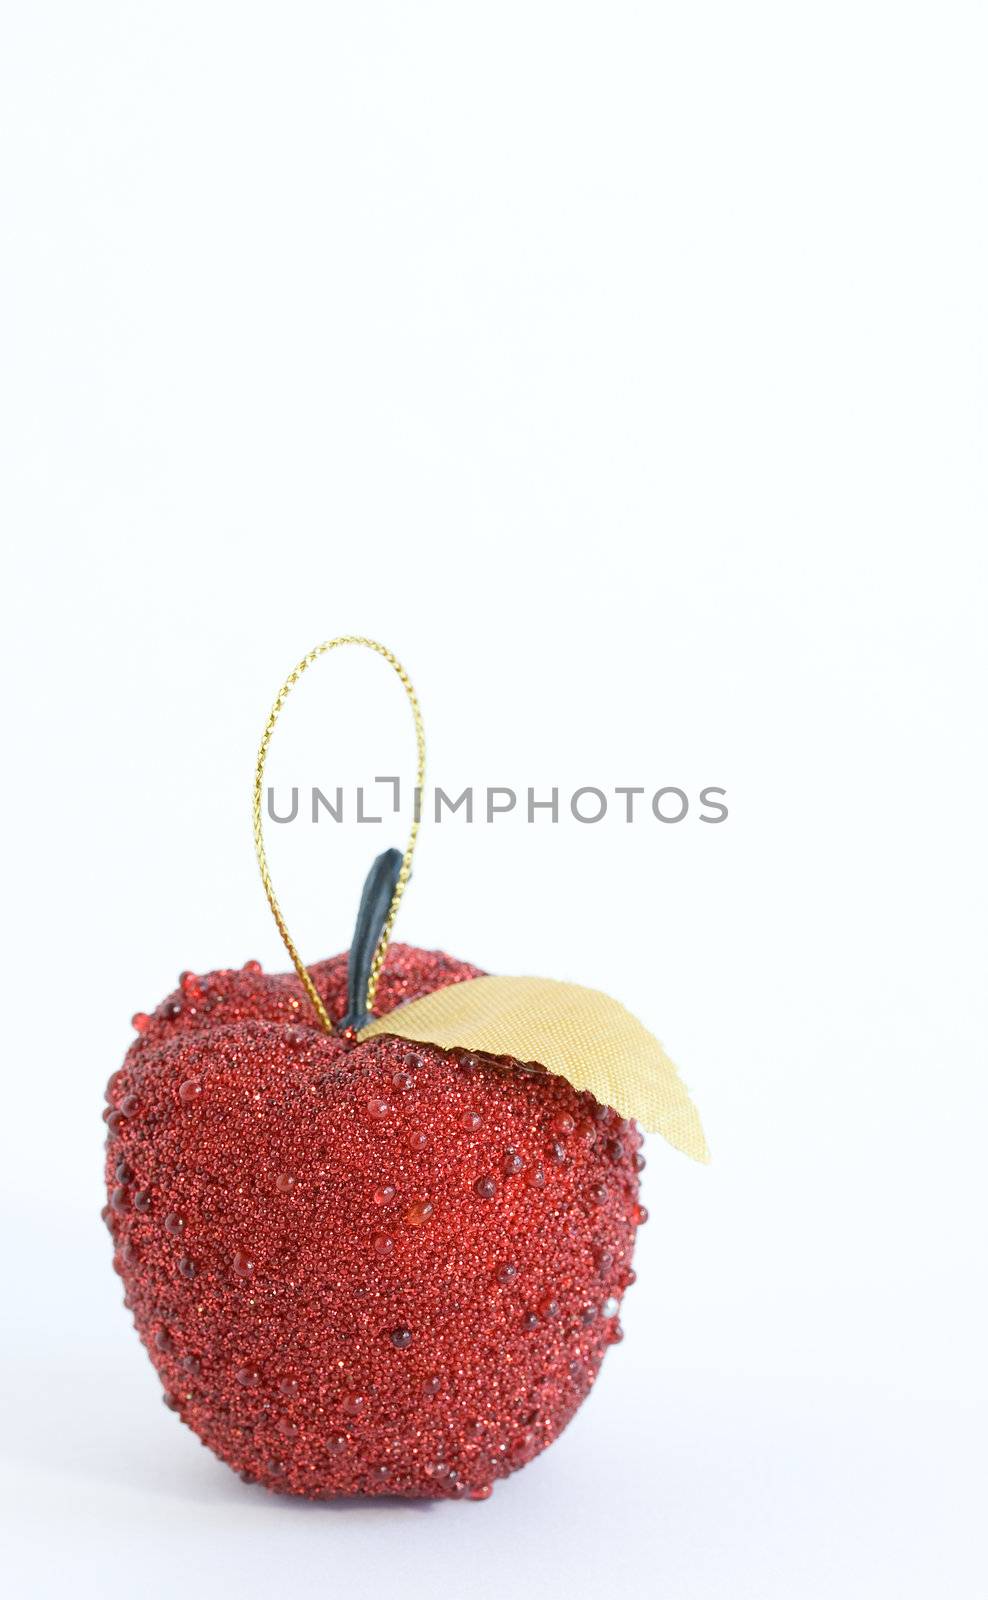 Hadicraft christmas tree red apple on white background